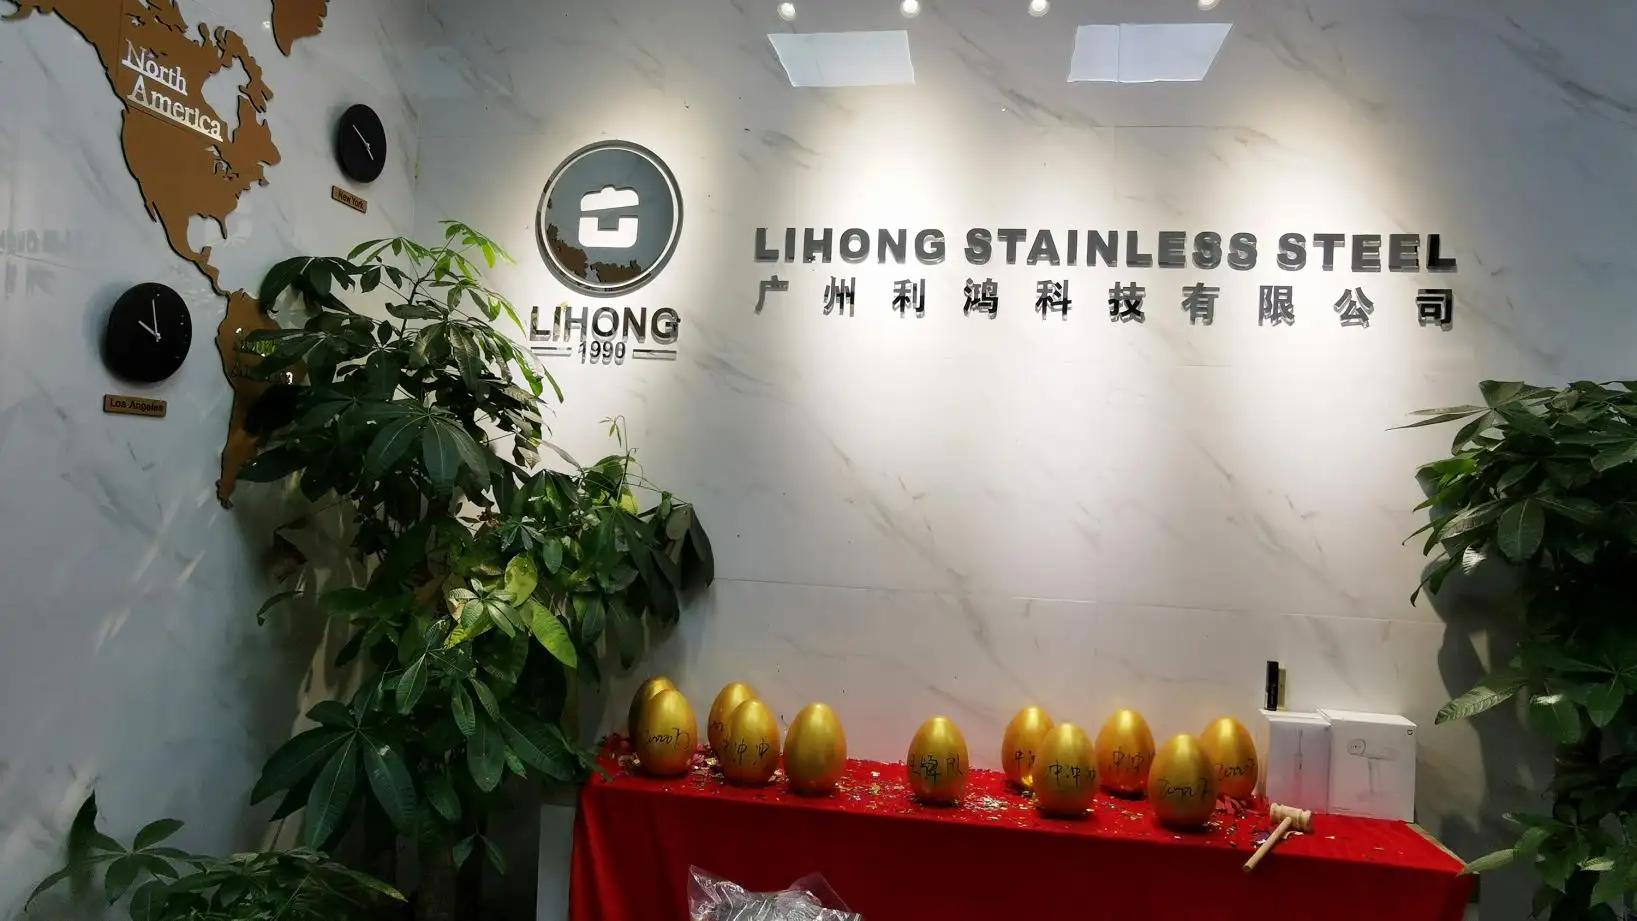 Guangzhou Lihong Science And Technology Co., Ltd.